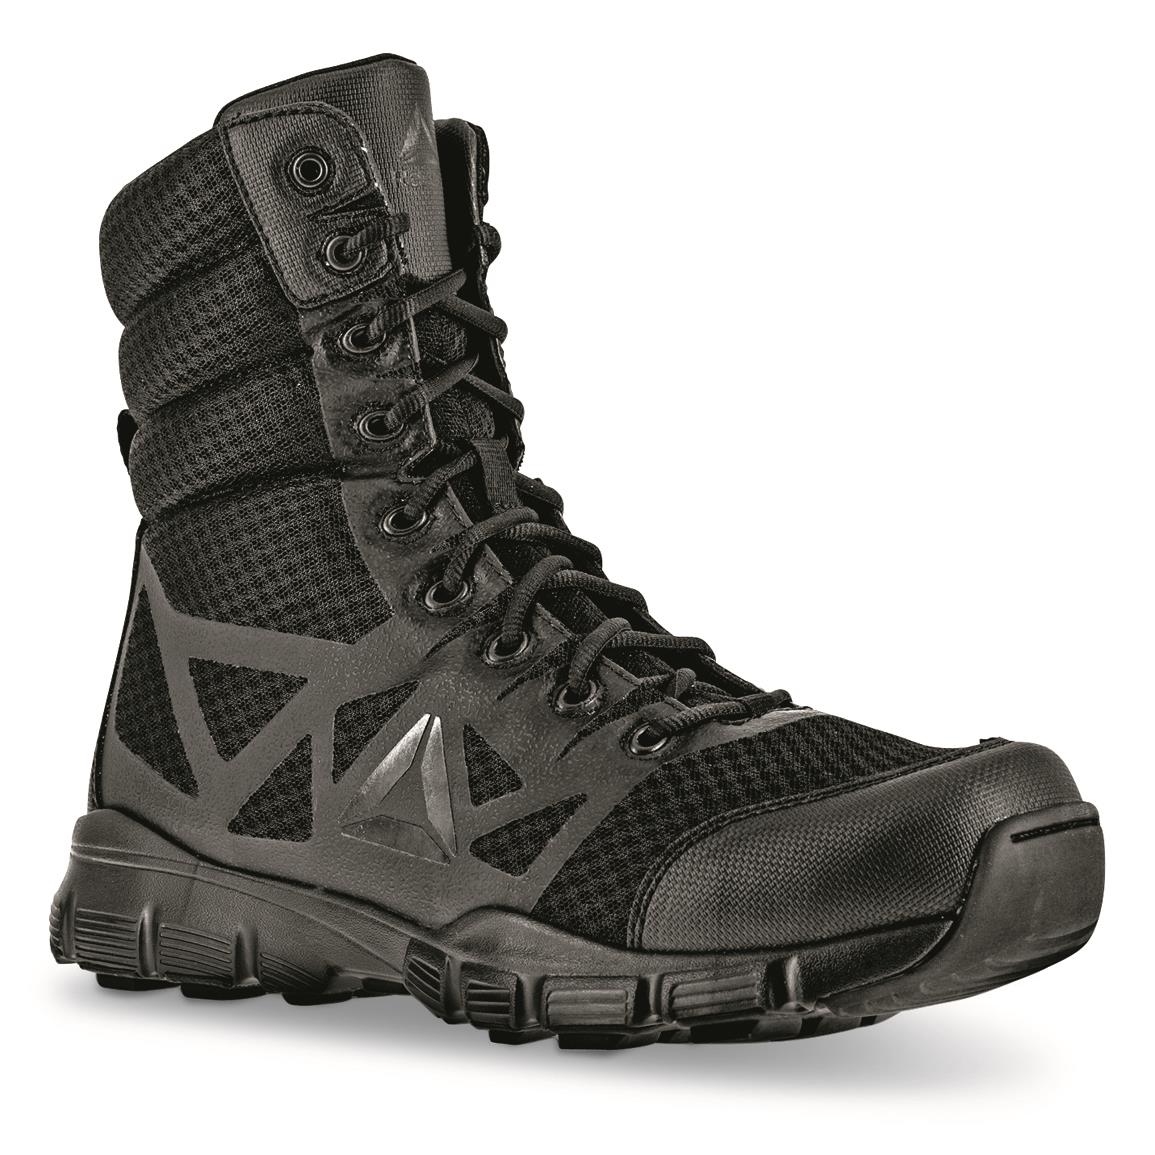 Reebok Men's 8" Dauntless Ultra Light Tactical Boots, Black